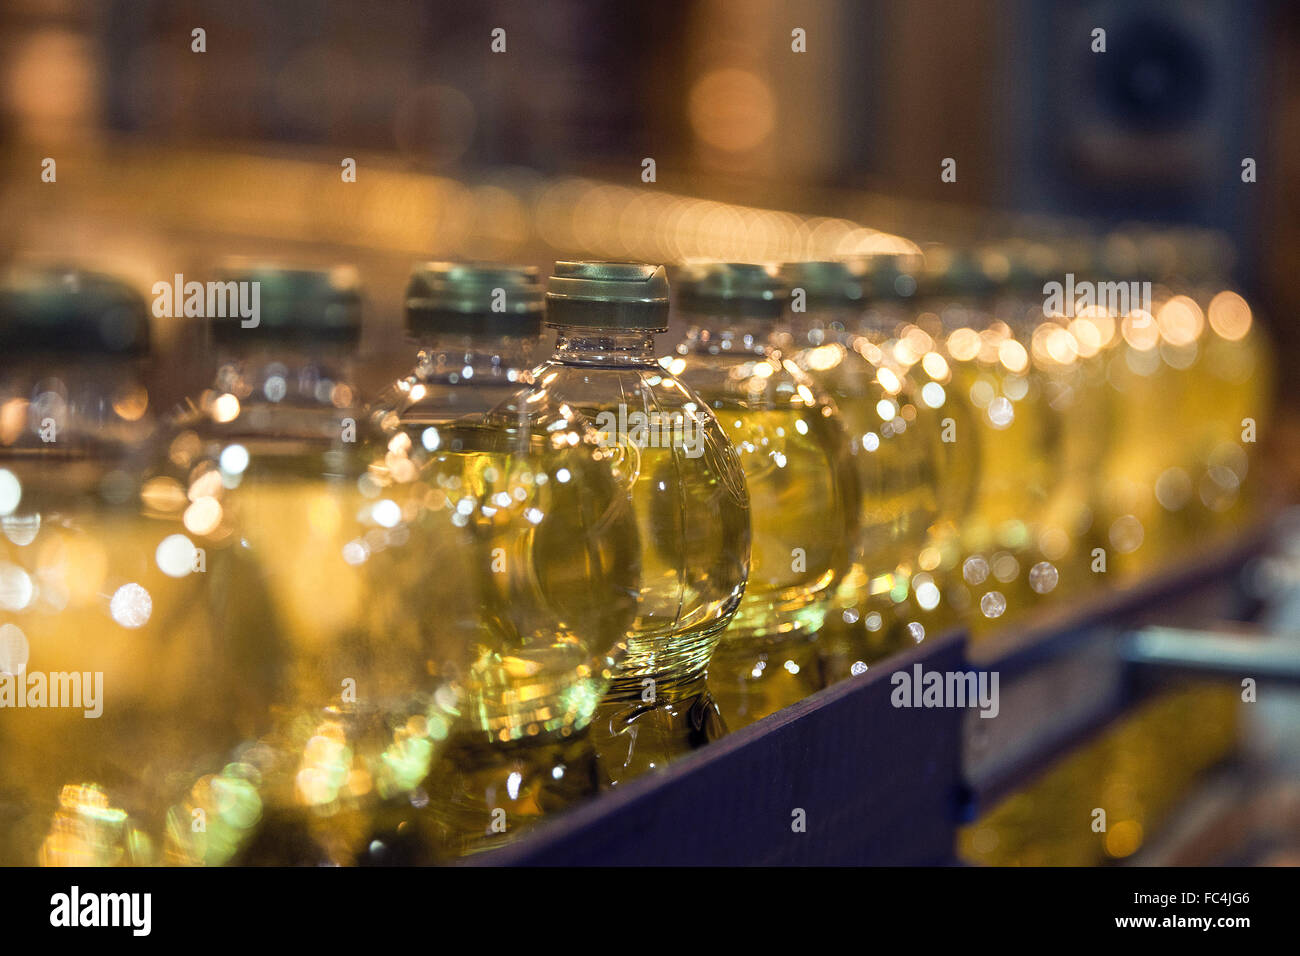 Detalhe de Envase de garrafas de óleo vegetal de soja agroindústria em Foto Stock